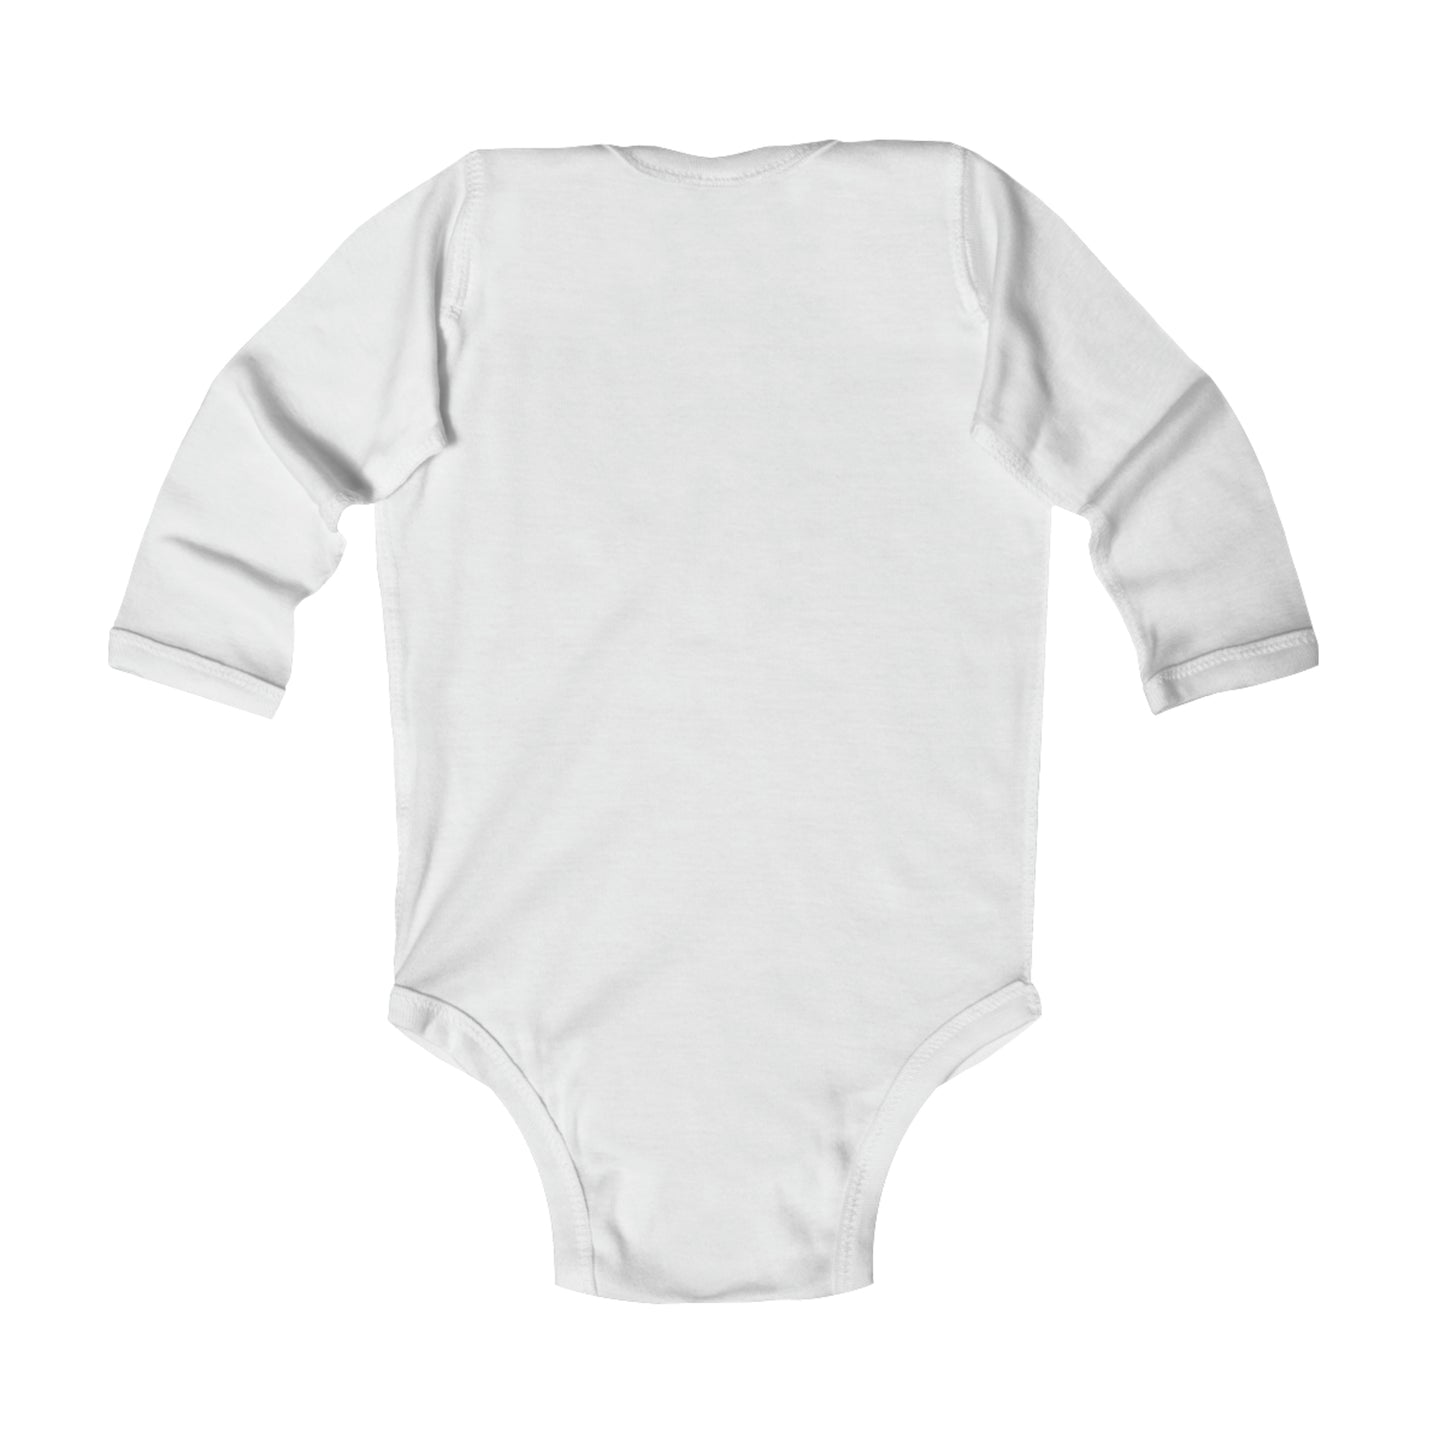 Infant Long Sleeve Bodysuit - Dream Big